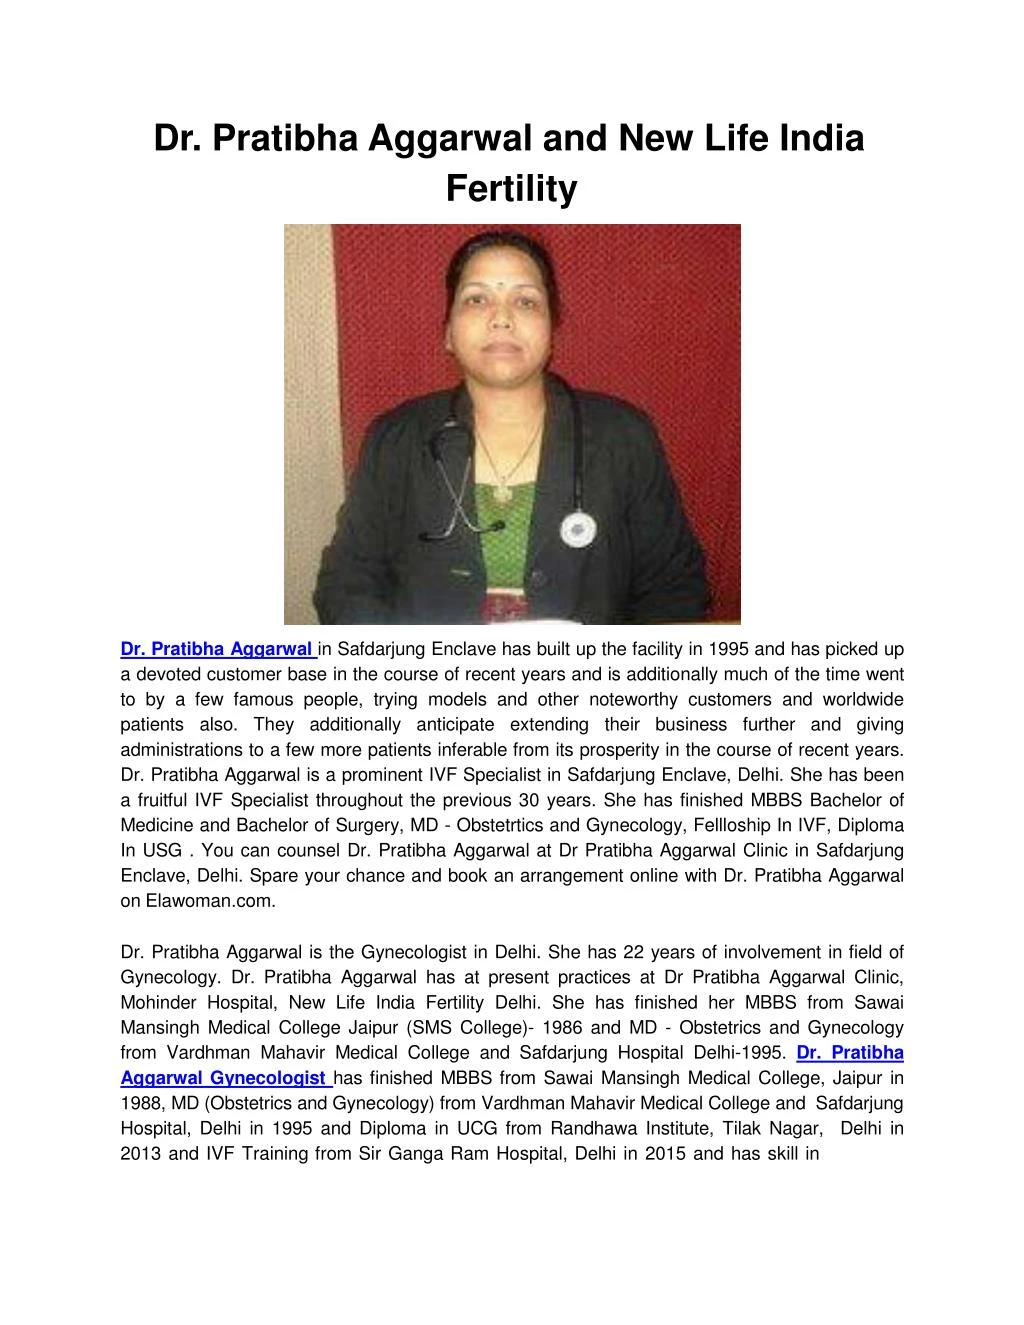 dr pratibha aggarwal and new life india fertility